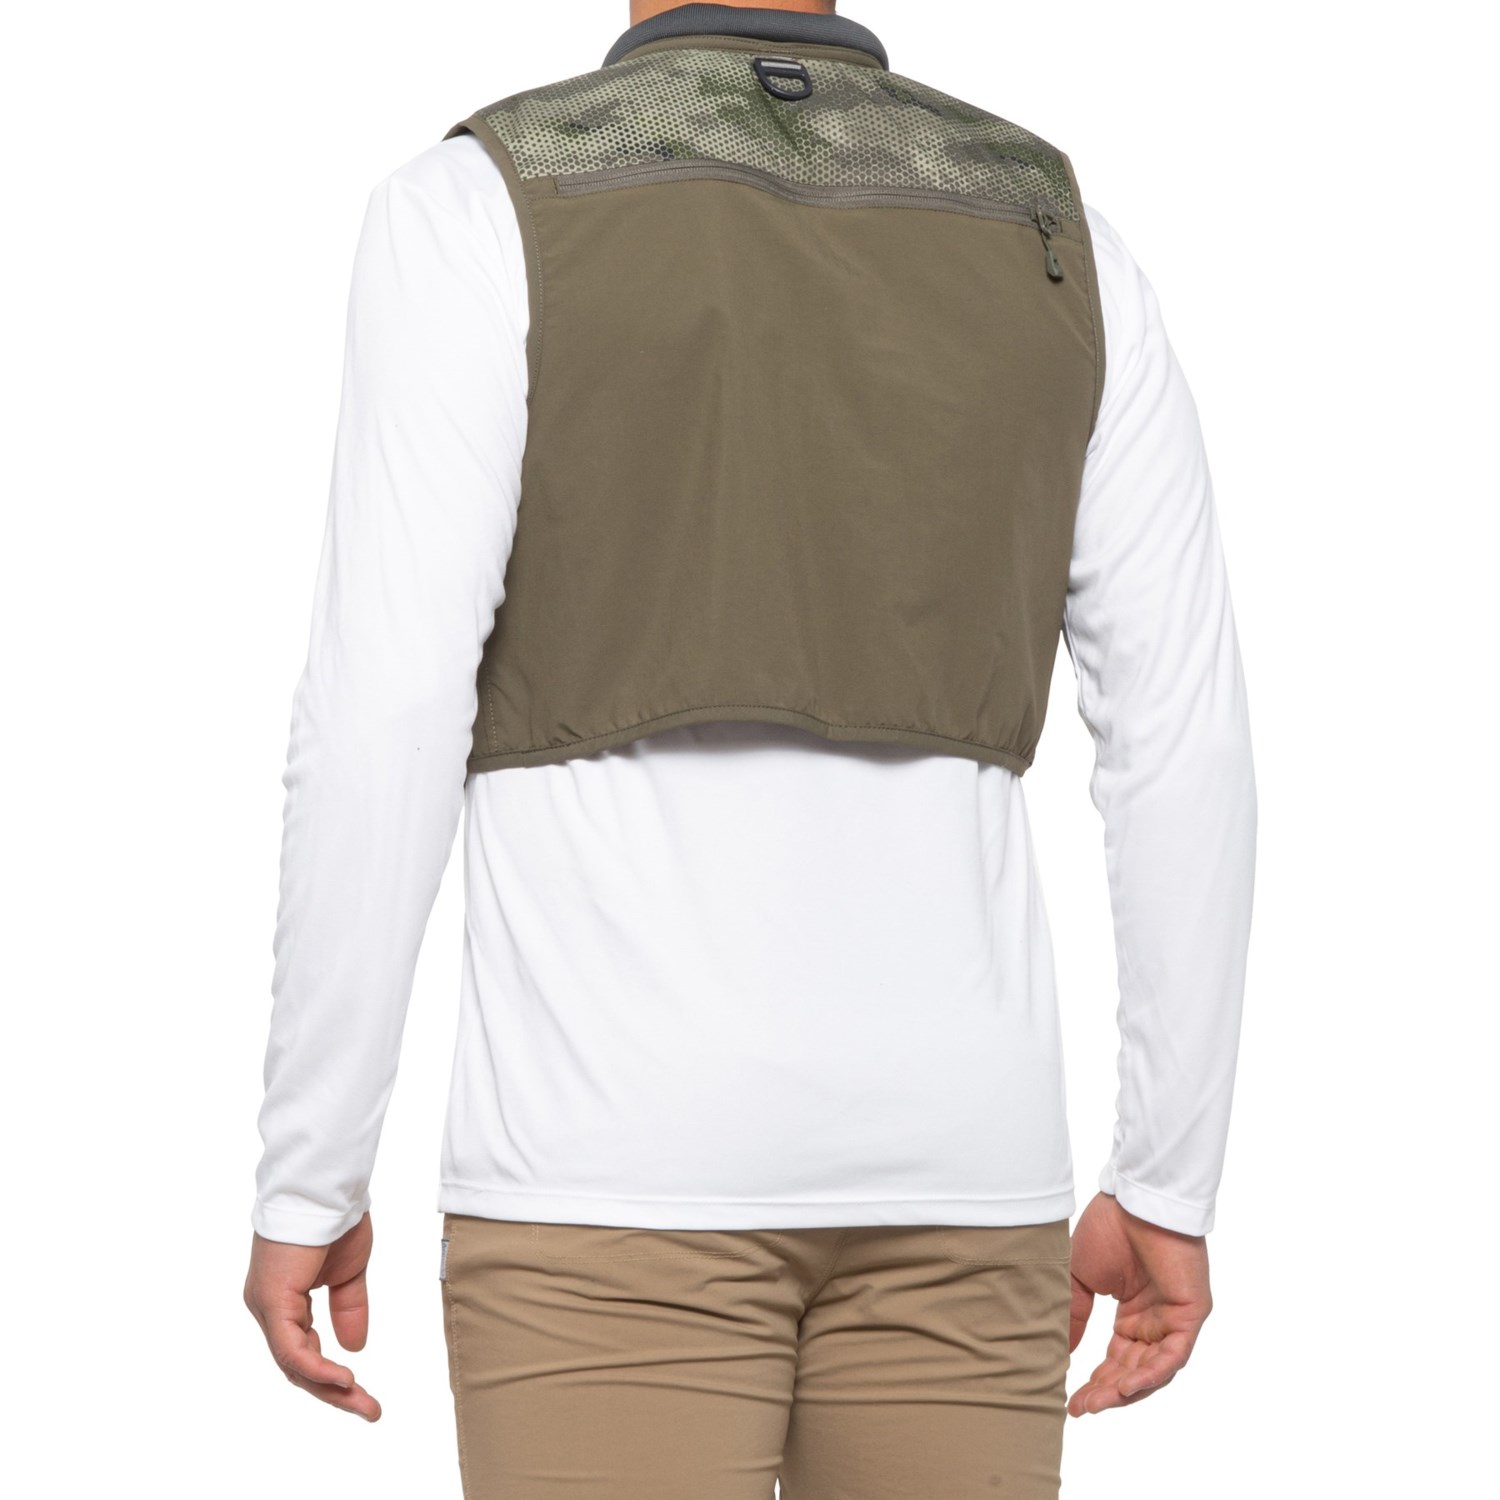 Simms Freestone Fishing Vest (For Men) - Save 49%